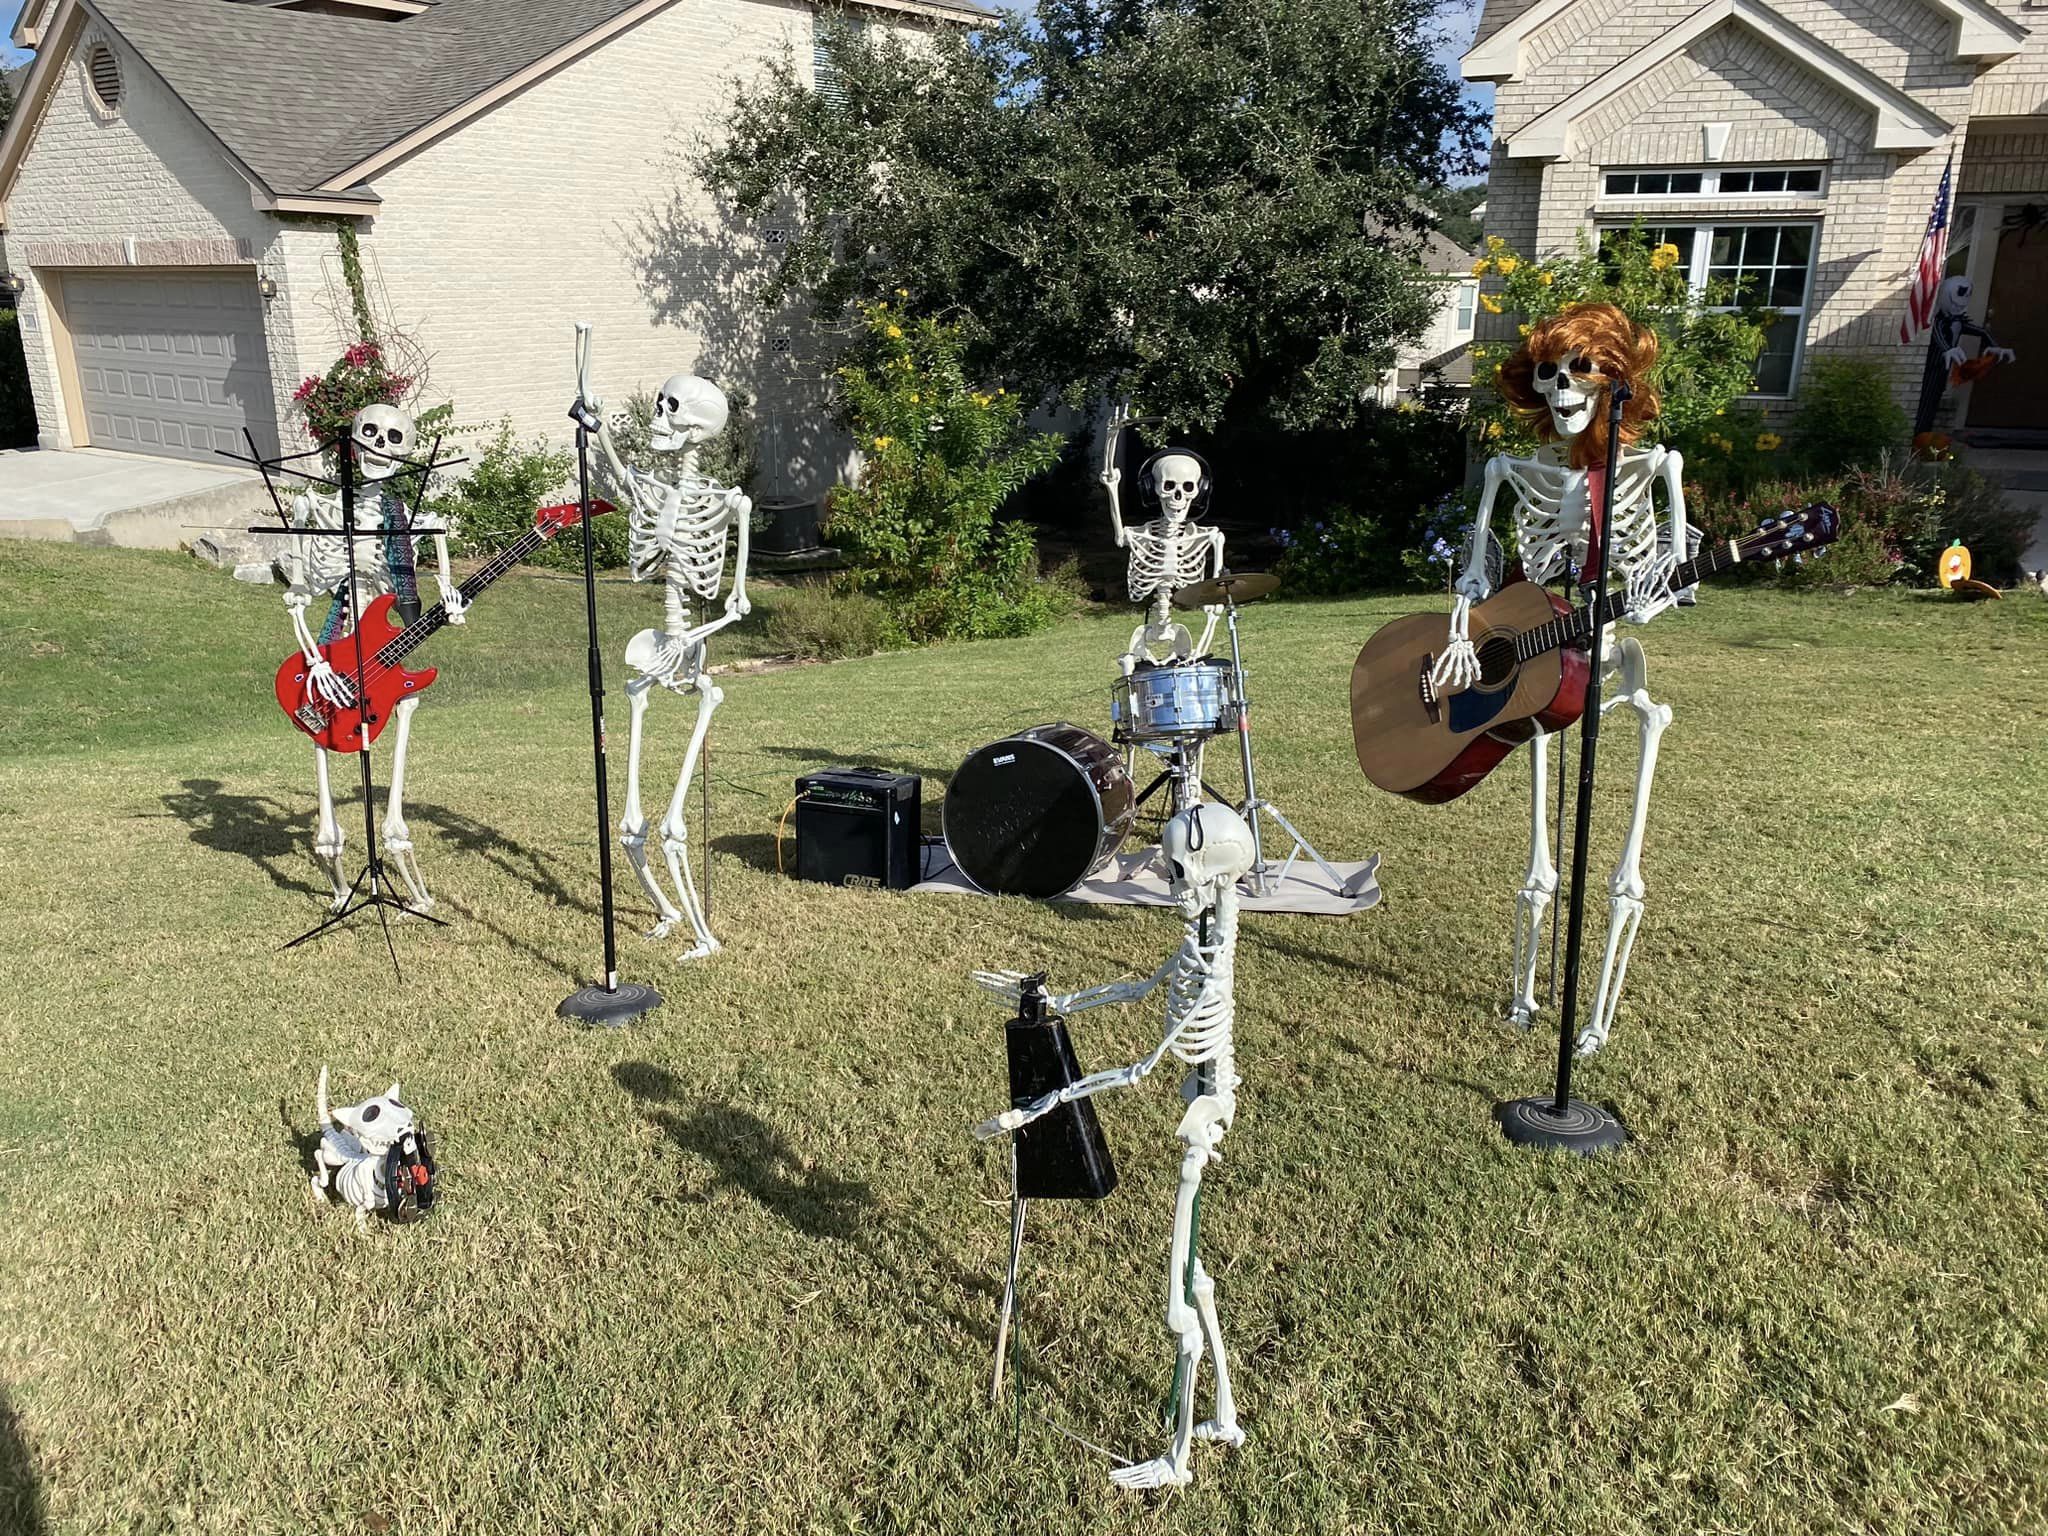 Skeleton House of San Antonio display of skeletons playing music in a band